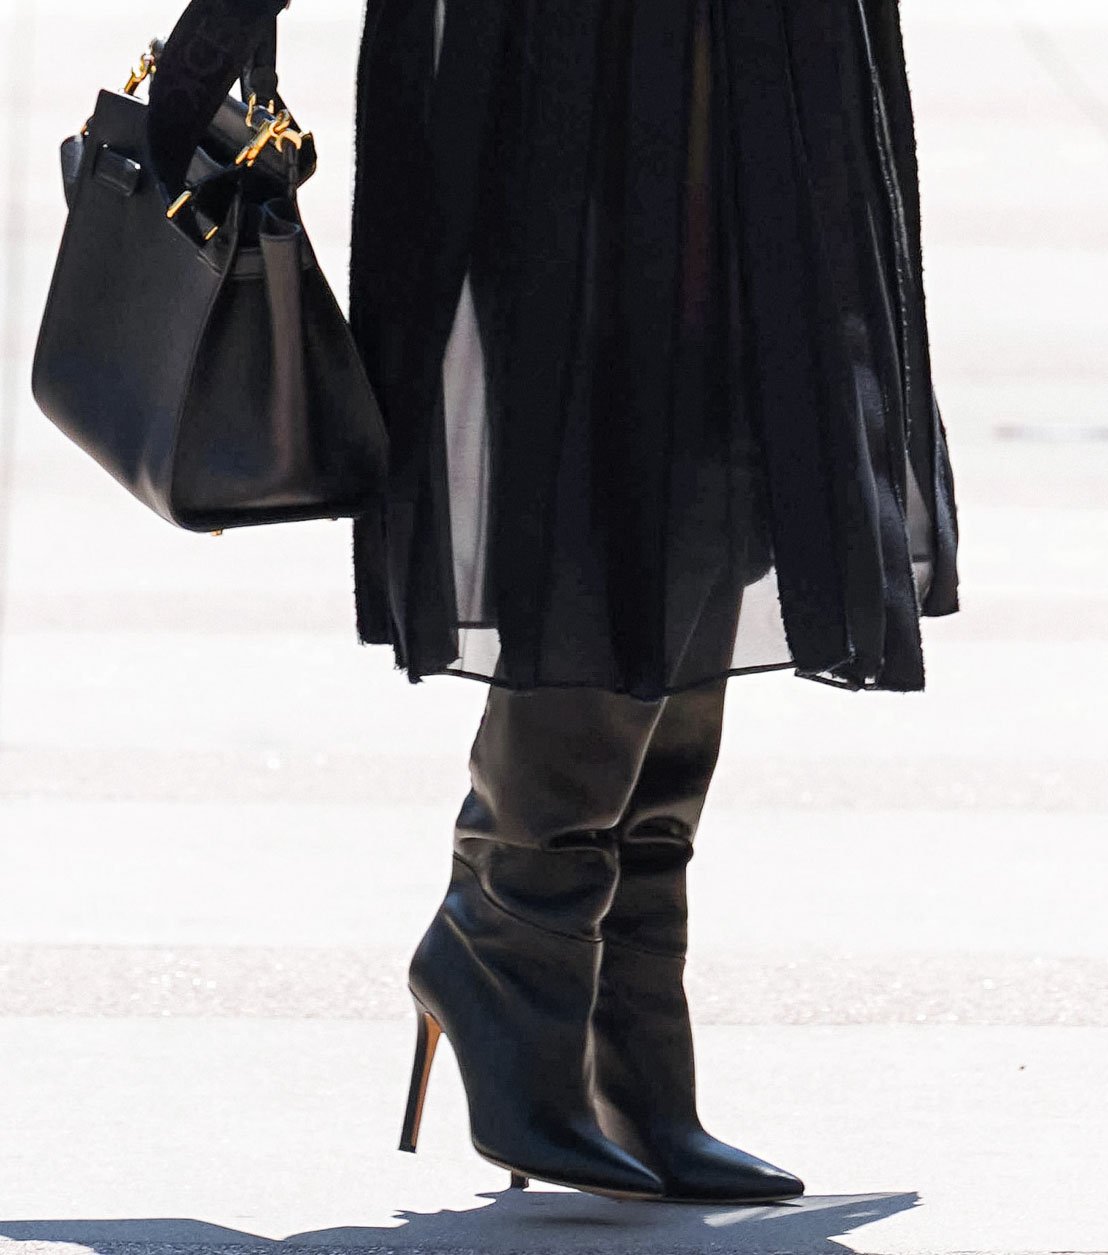 Heidi Klum completes her head-to-toe black look with Tamara Mellon Icon tall boots